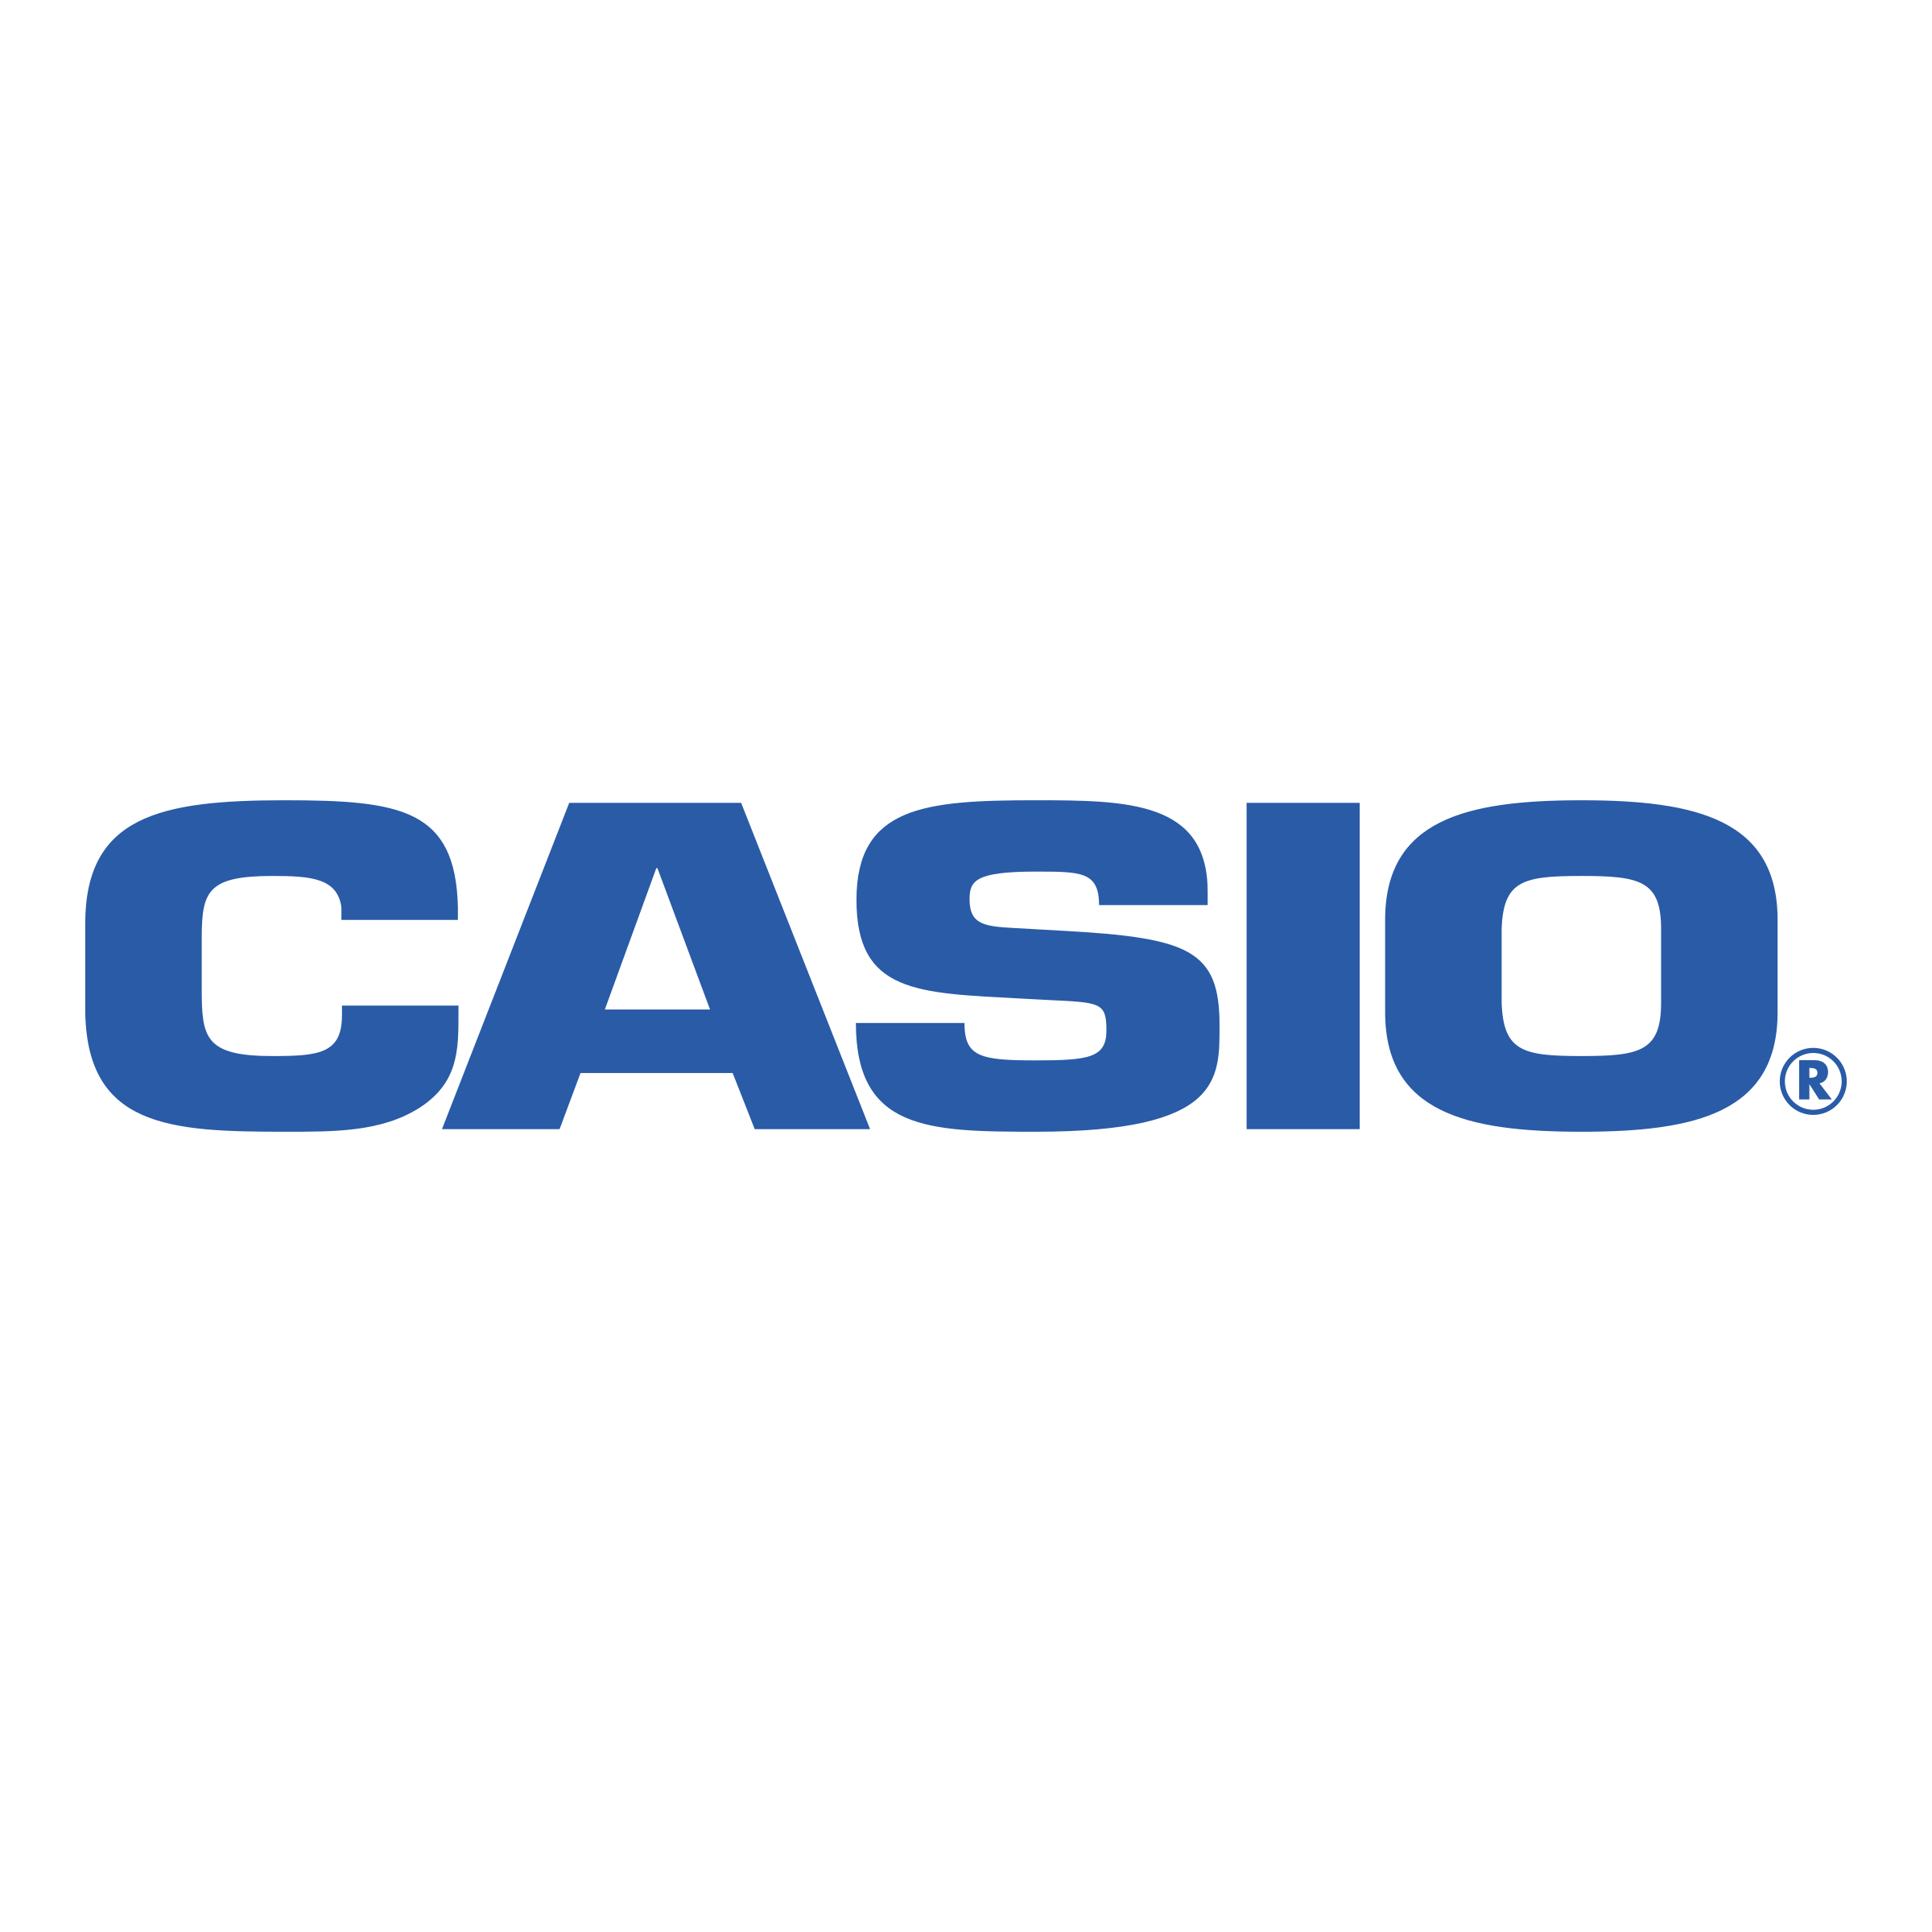 Casio Logo - Casio Logo PNG Transparent & SVG Vector